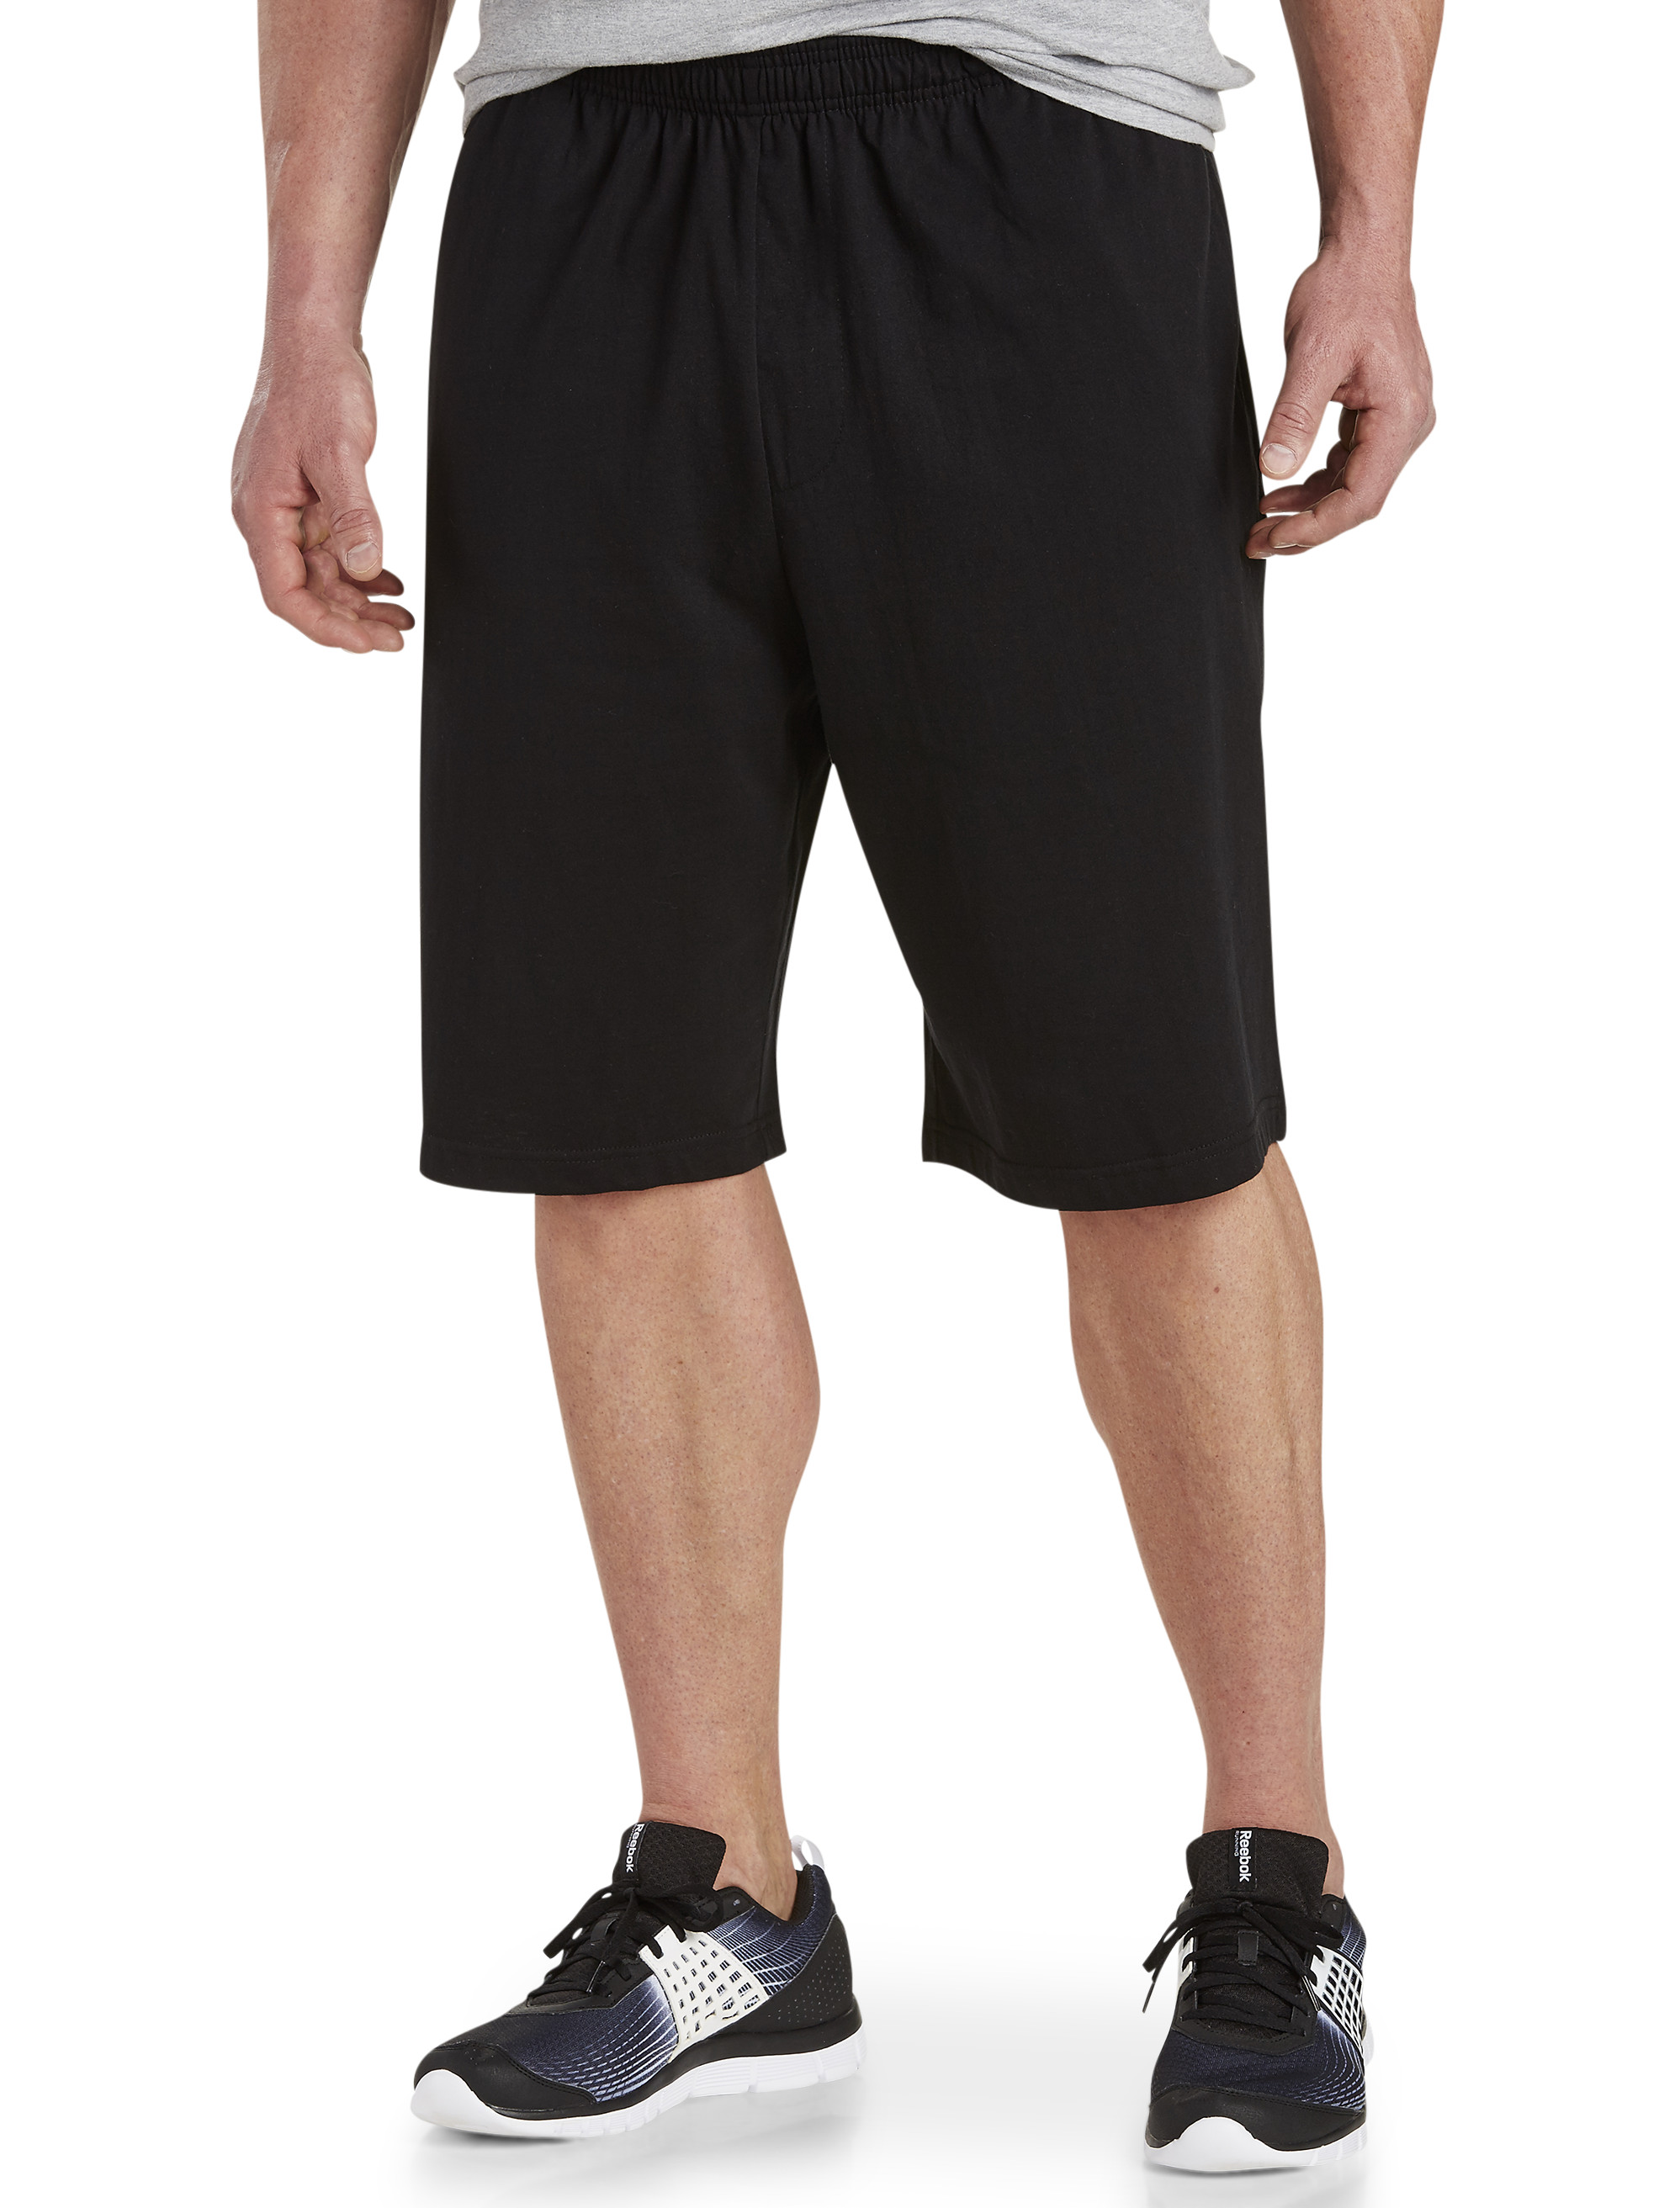 Big + Tall | Harbor Bay Cotton Shorts | DXL